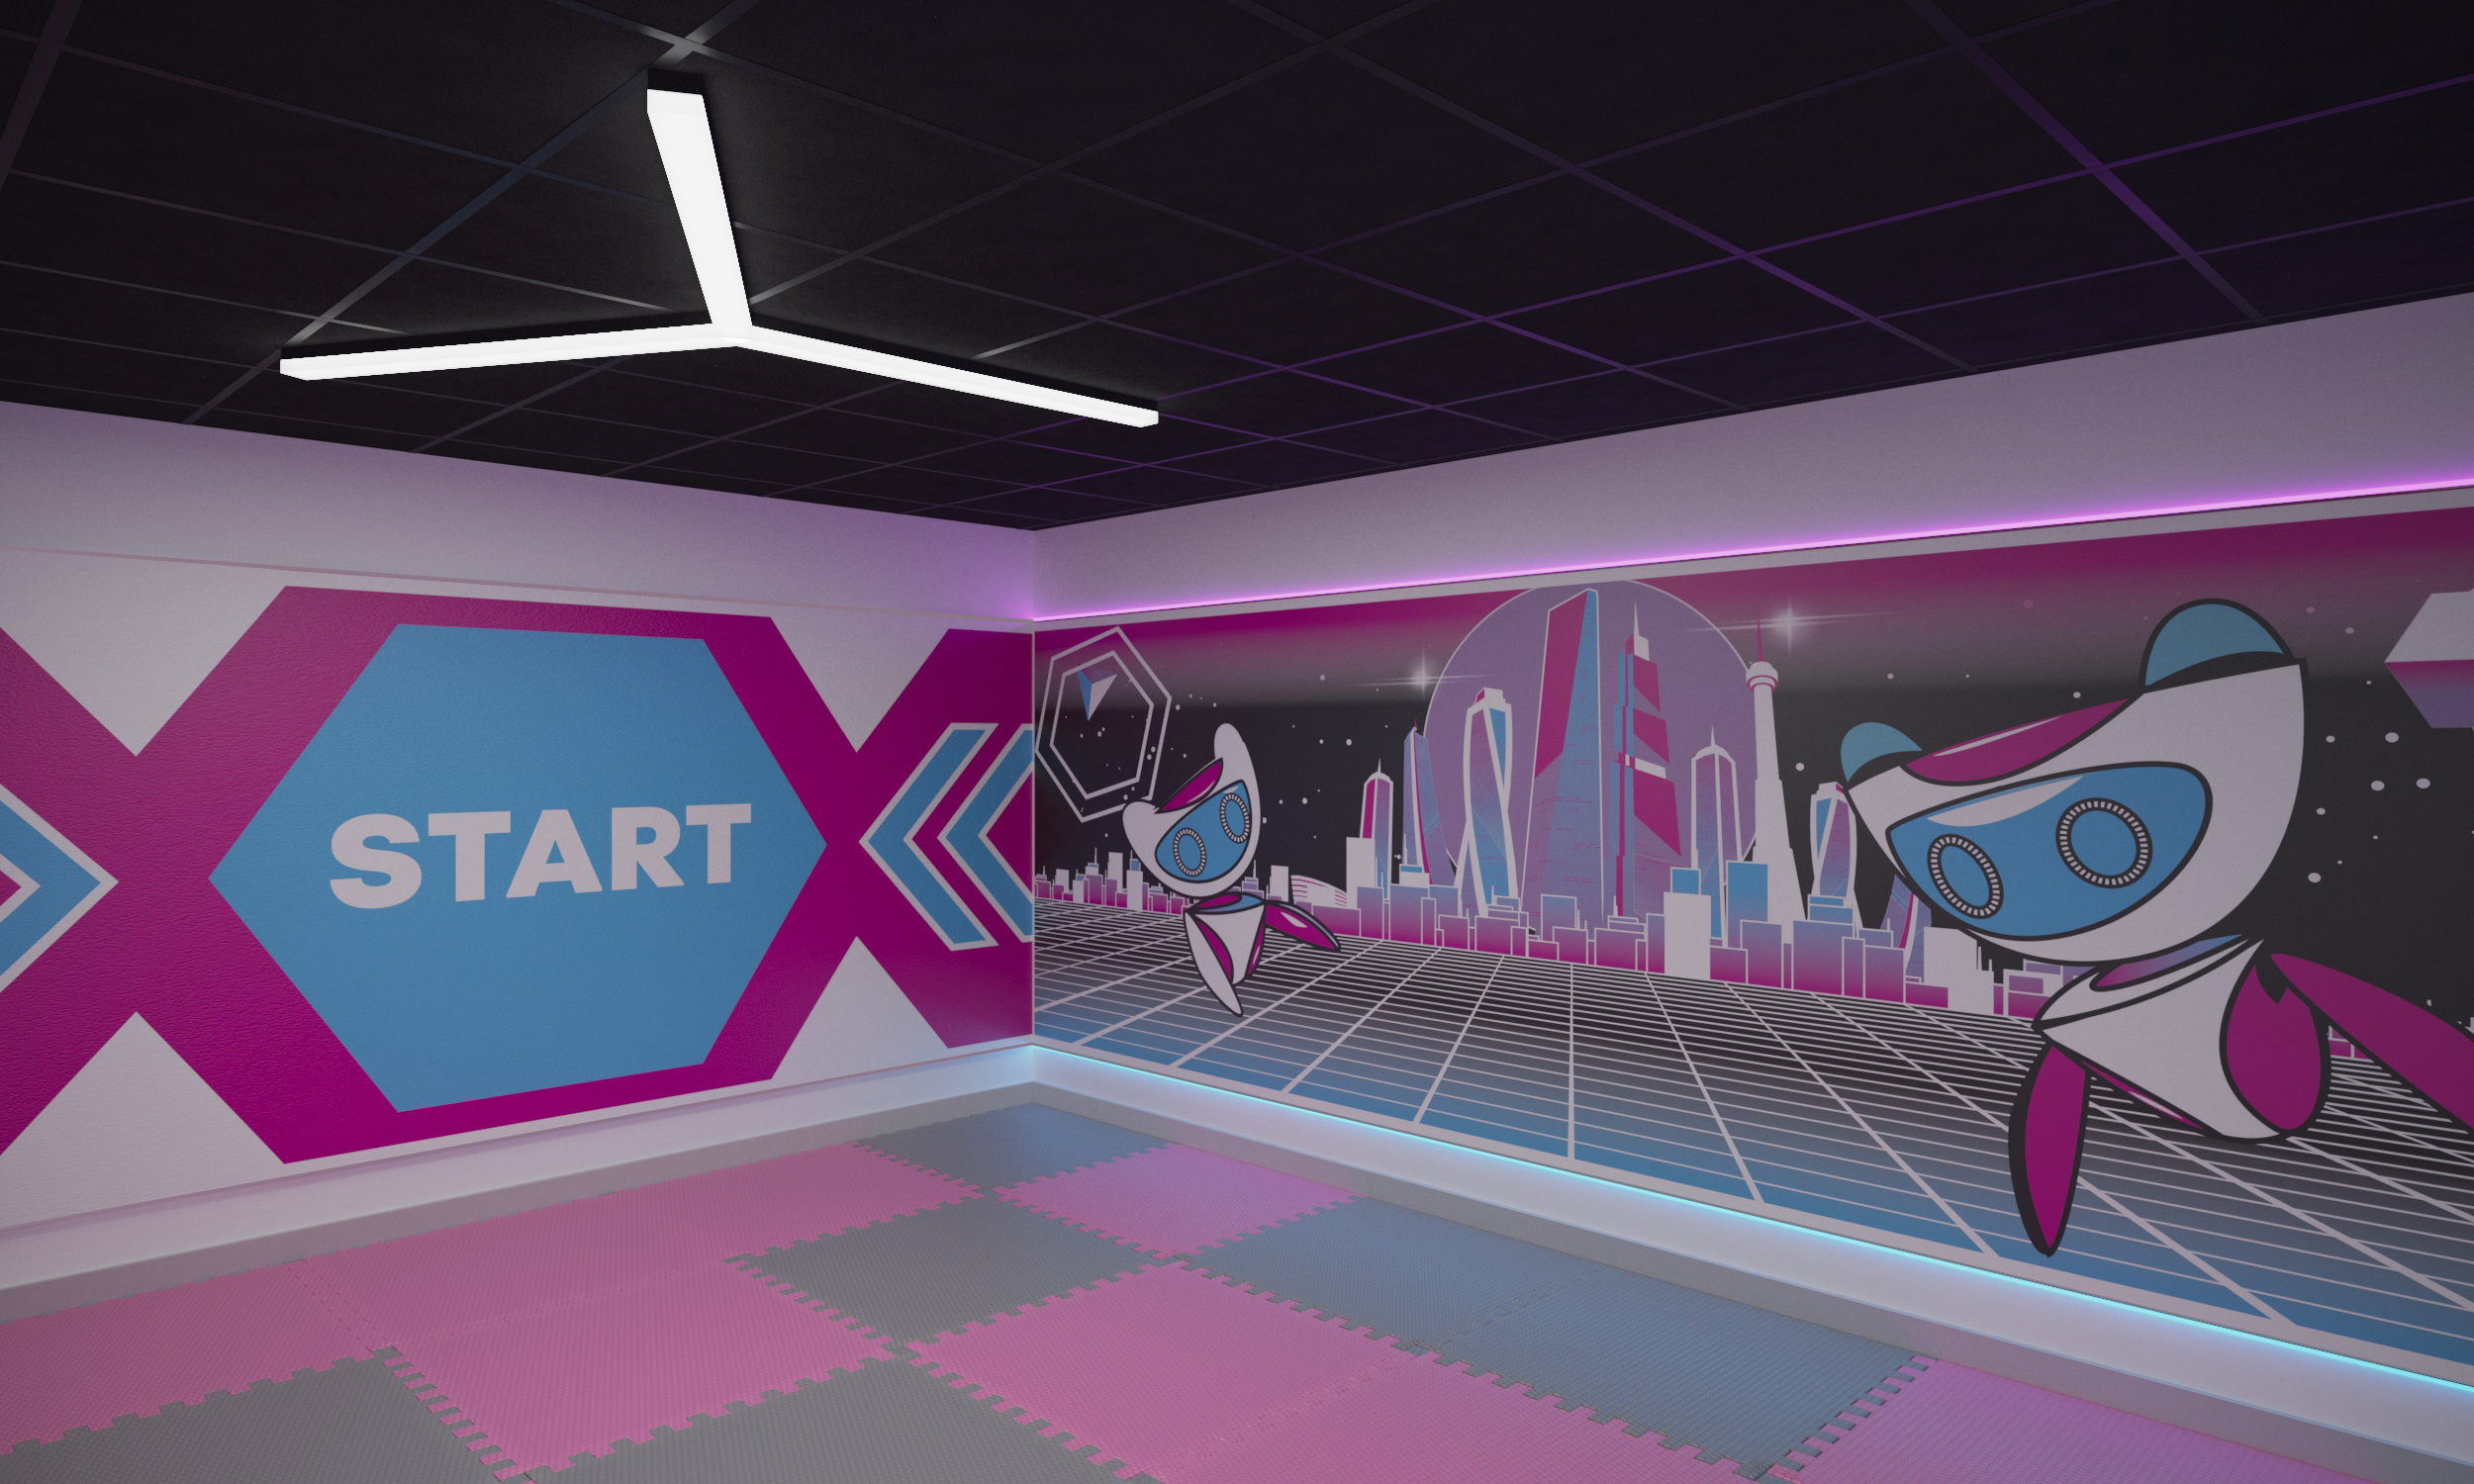 VR arena design project for customer’s premises photo 2